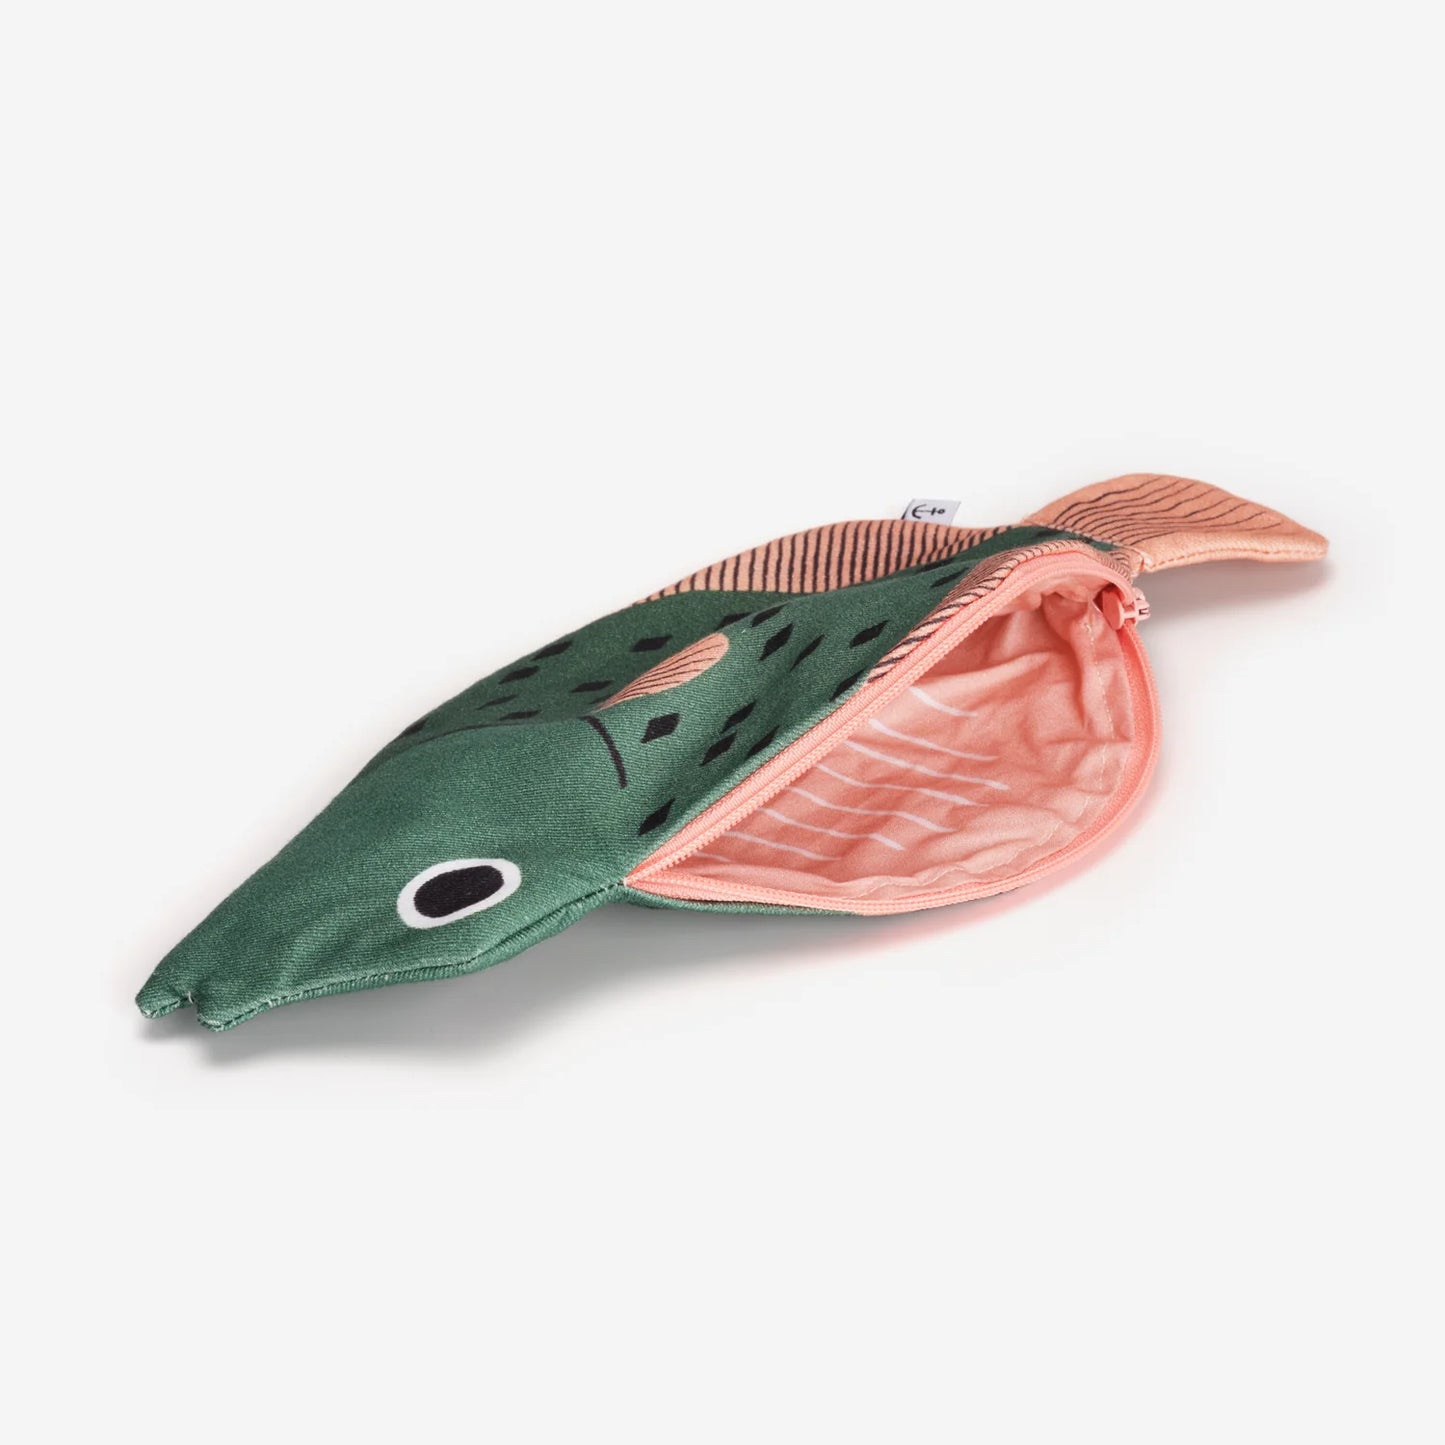 Green Oreo Fish Purse